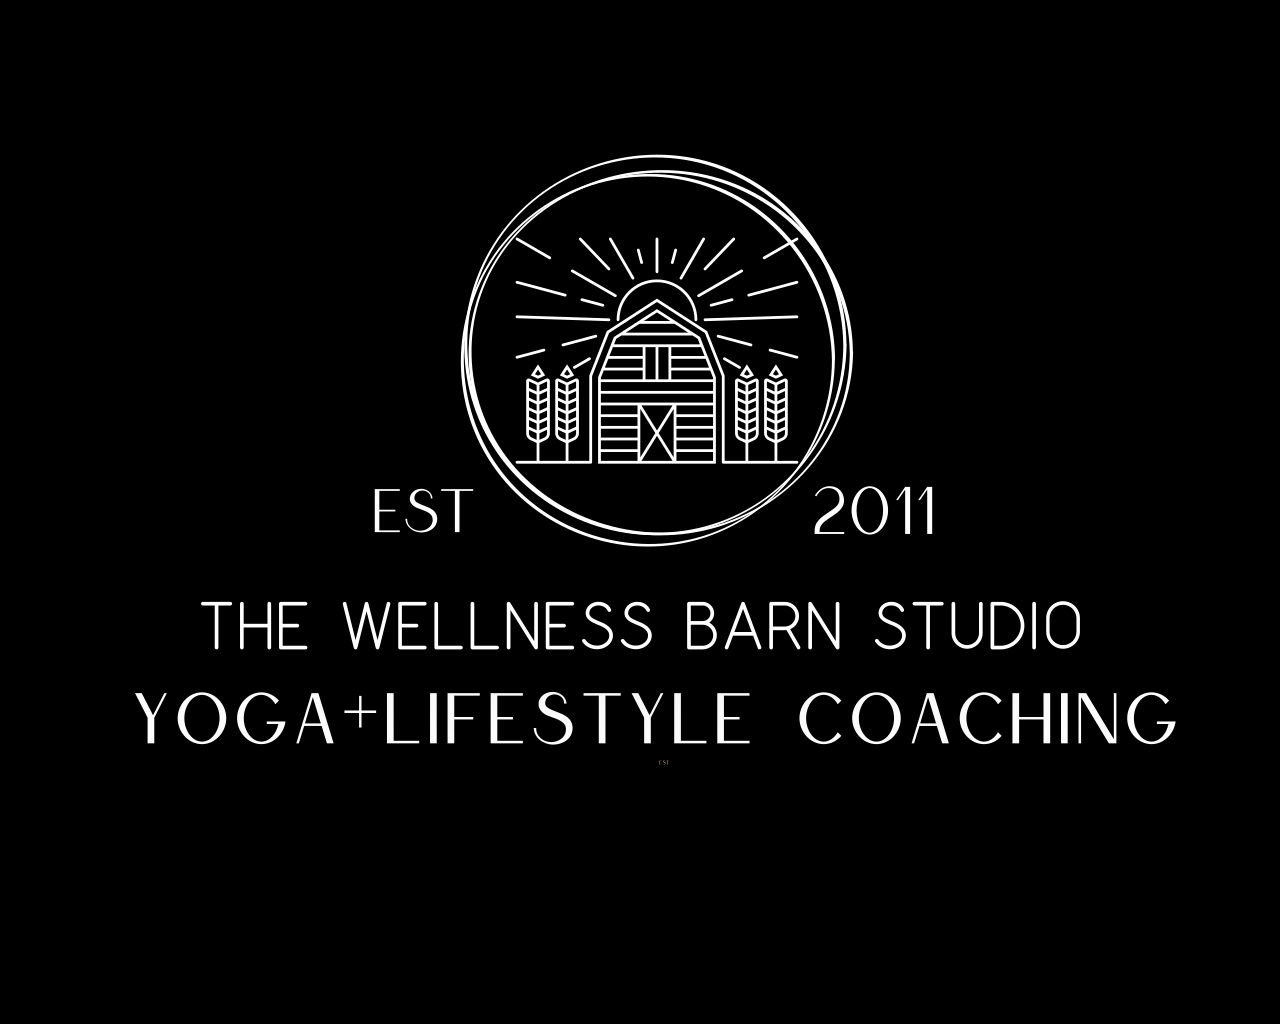 The Wellness Barn Studio